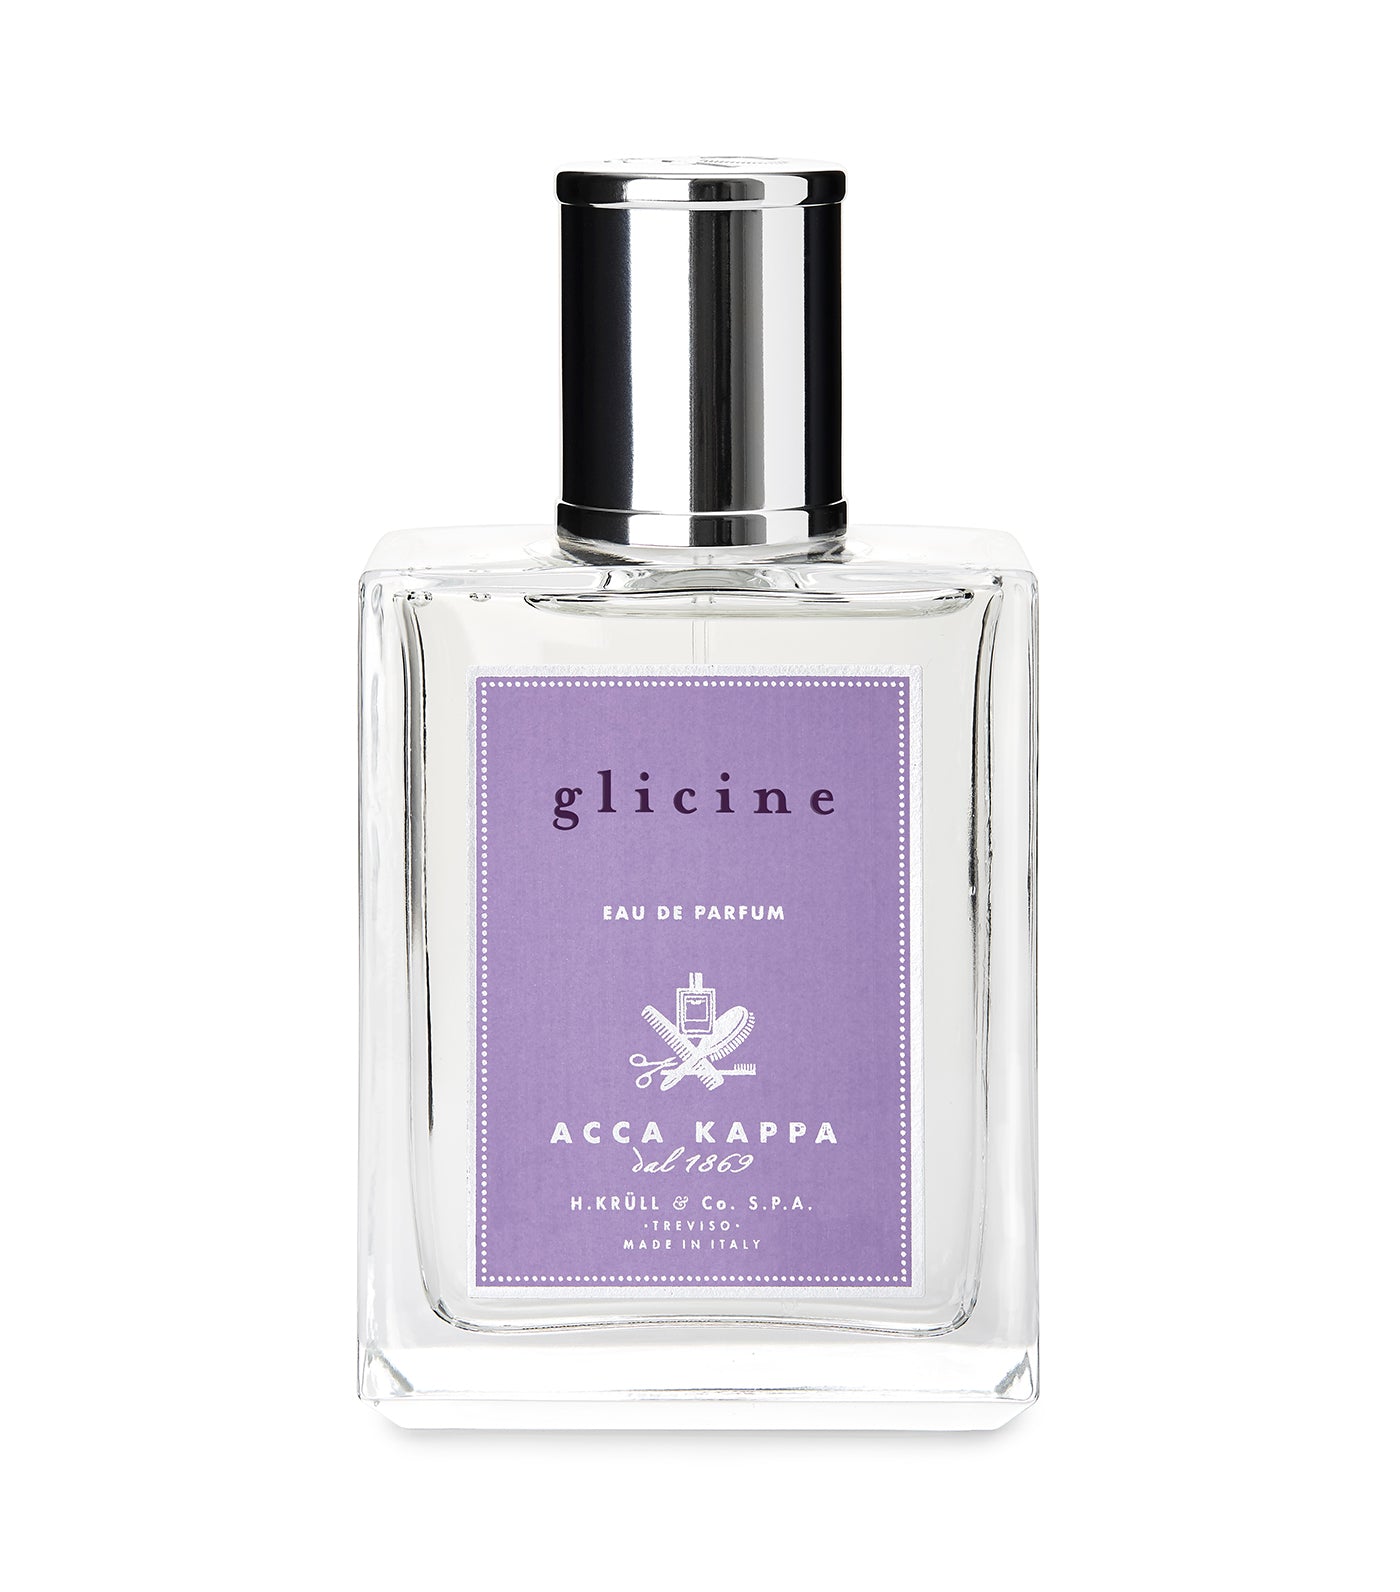 acca kappa wisteria eau de parfum